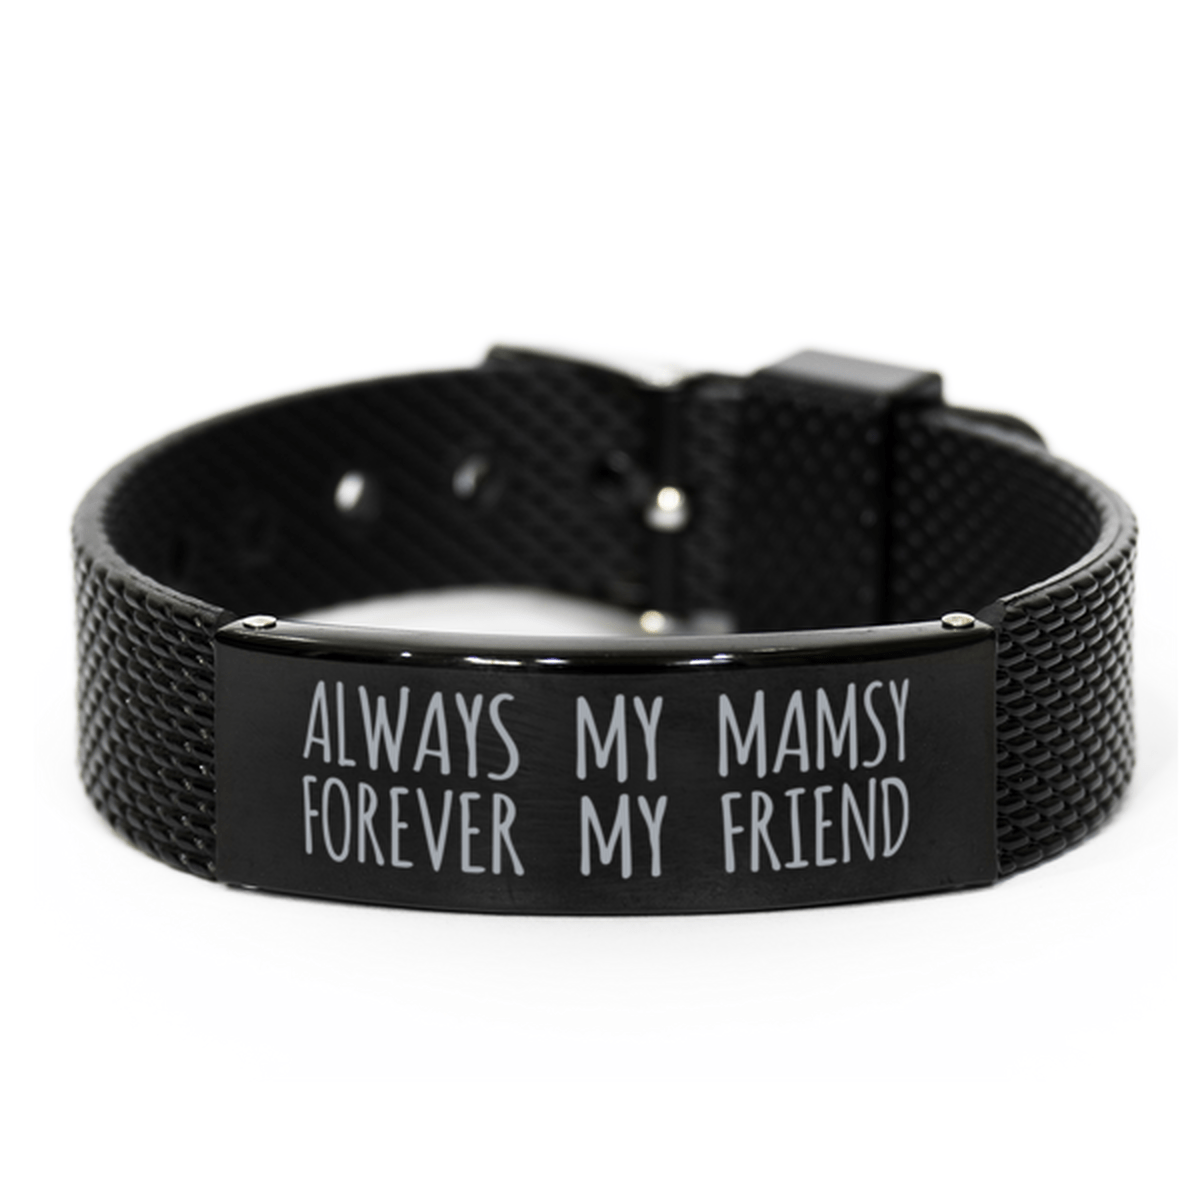 Inspirational Mamsy Black Shark Mesh Bracelet, Always My Mamsy Forever My Friend, Best Birthday Gifts for Family Friends